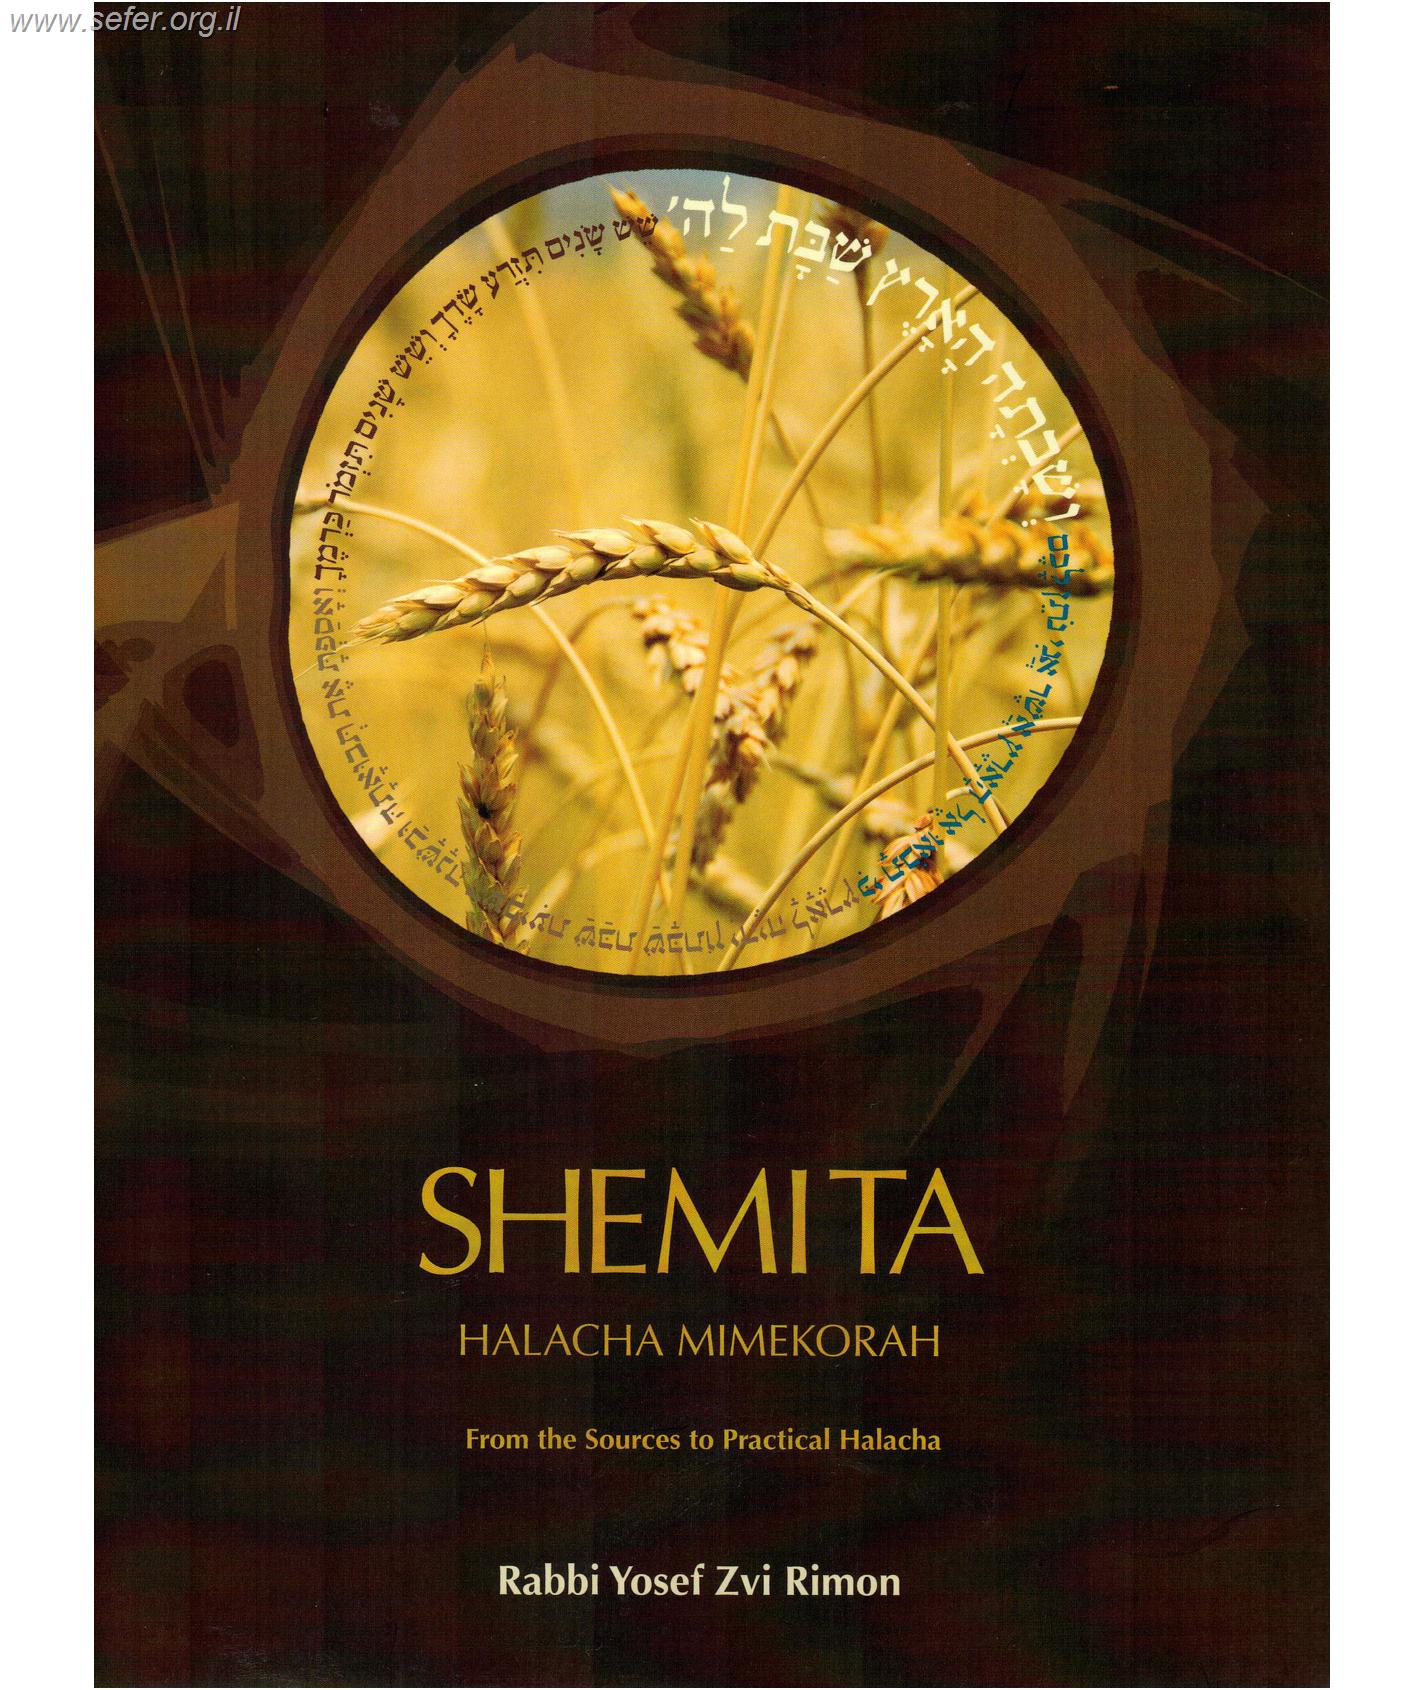 Shemita - From the Sources to Practical Halakha / Rabbi yosef zvi rimon